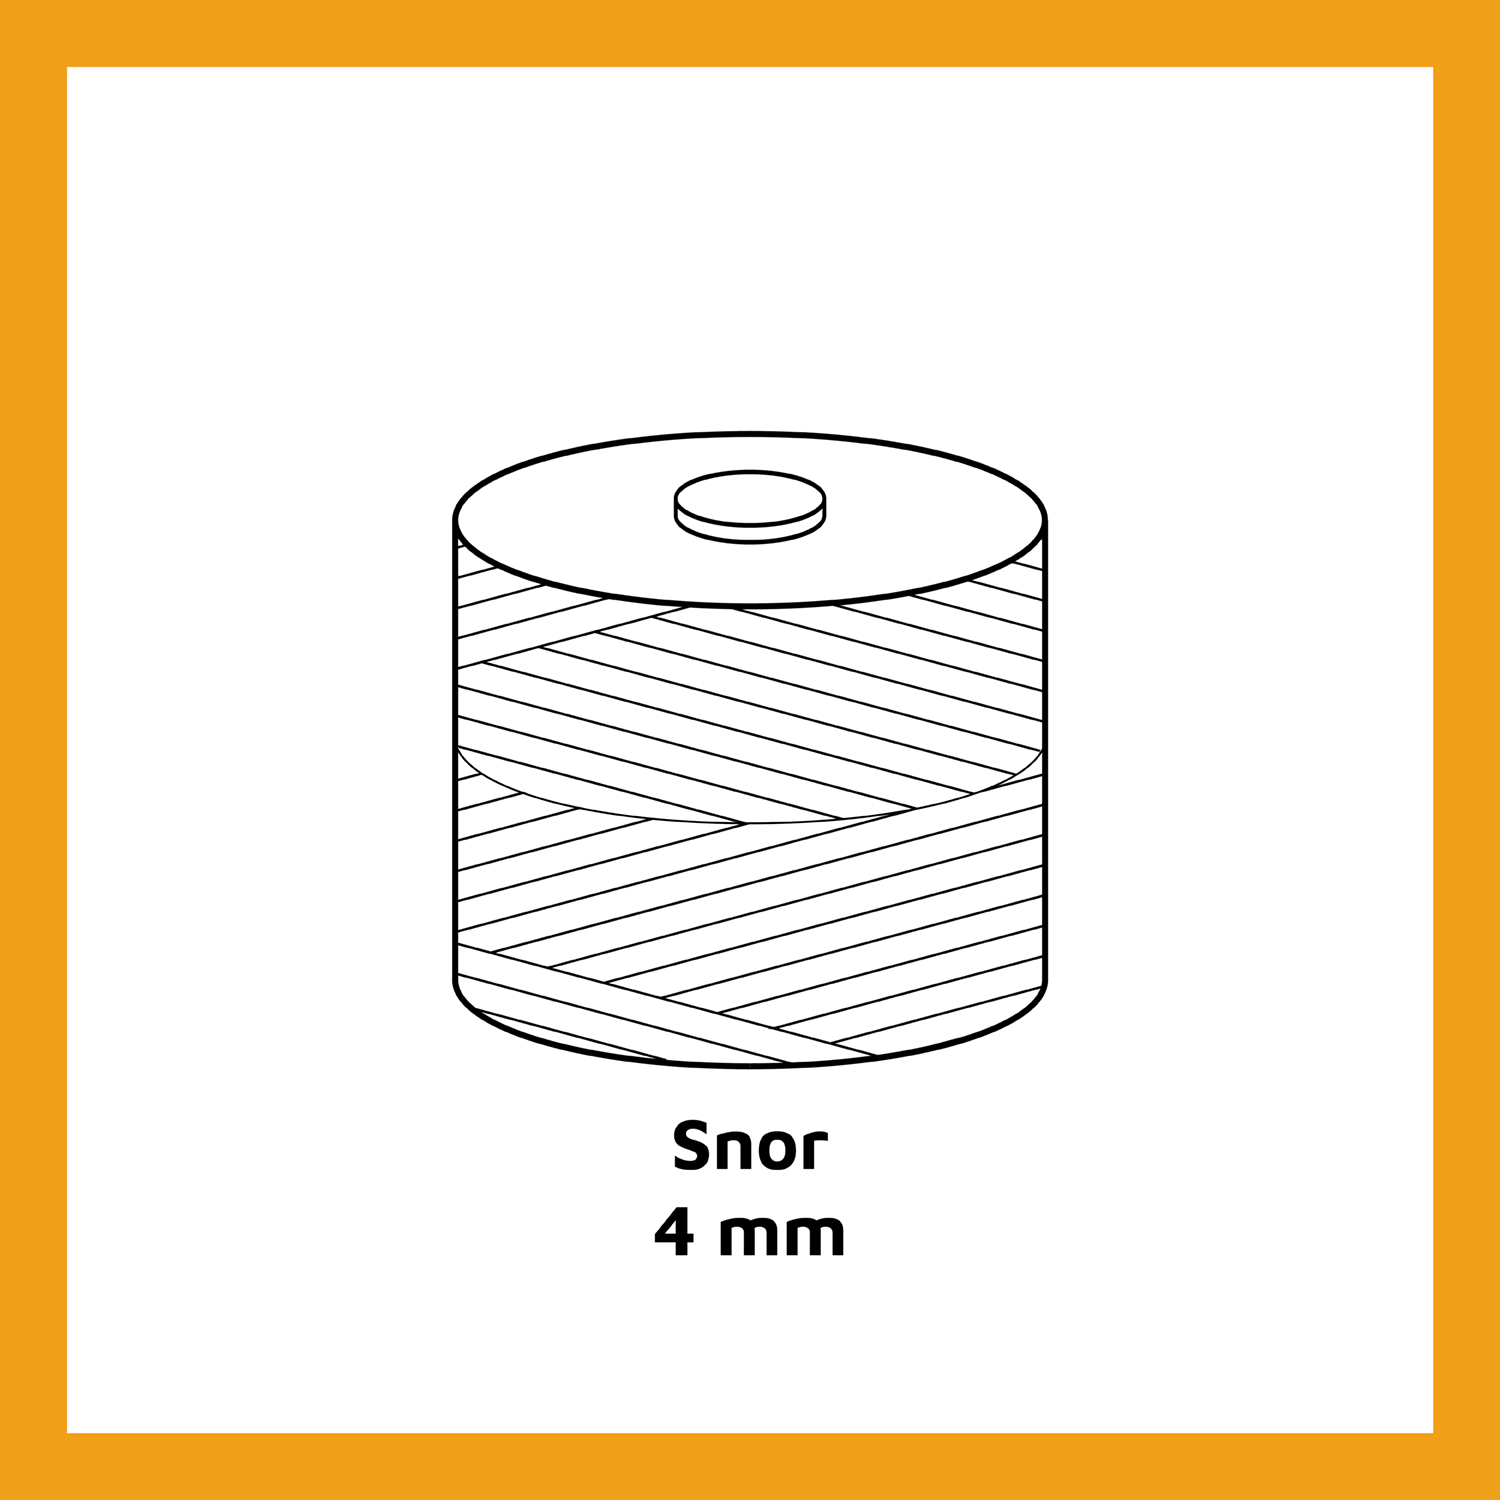 Snor - 4 mm